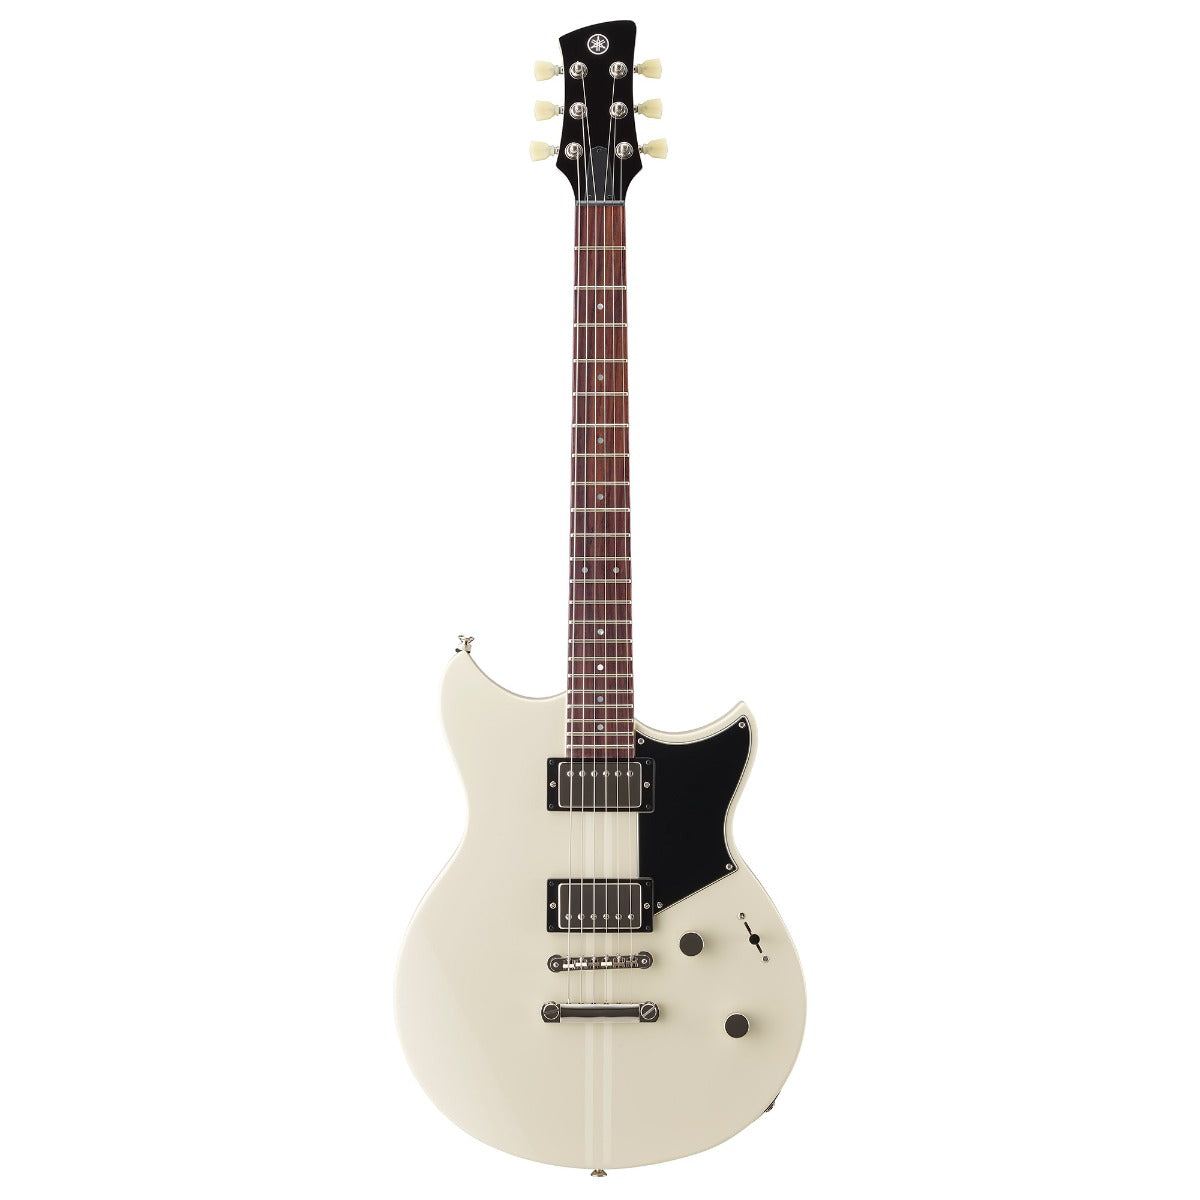 Yamaha RSE20 Revstar Element Electric Guitar - Vintage White, View 3